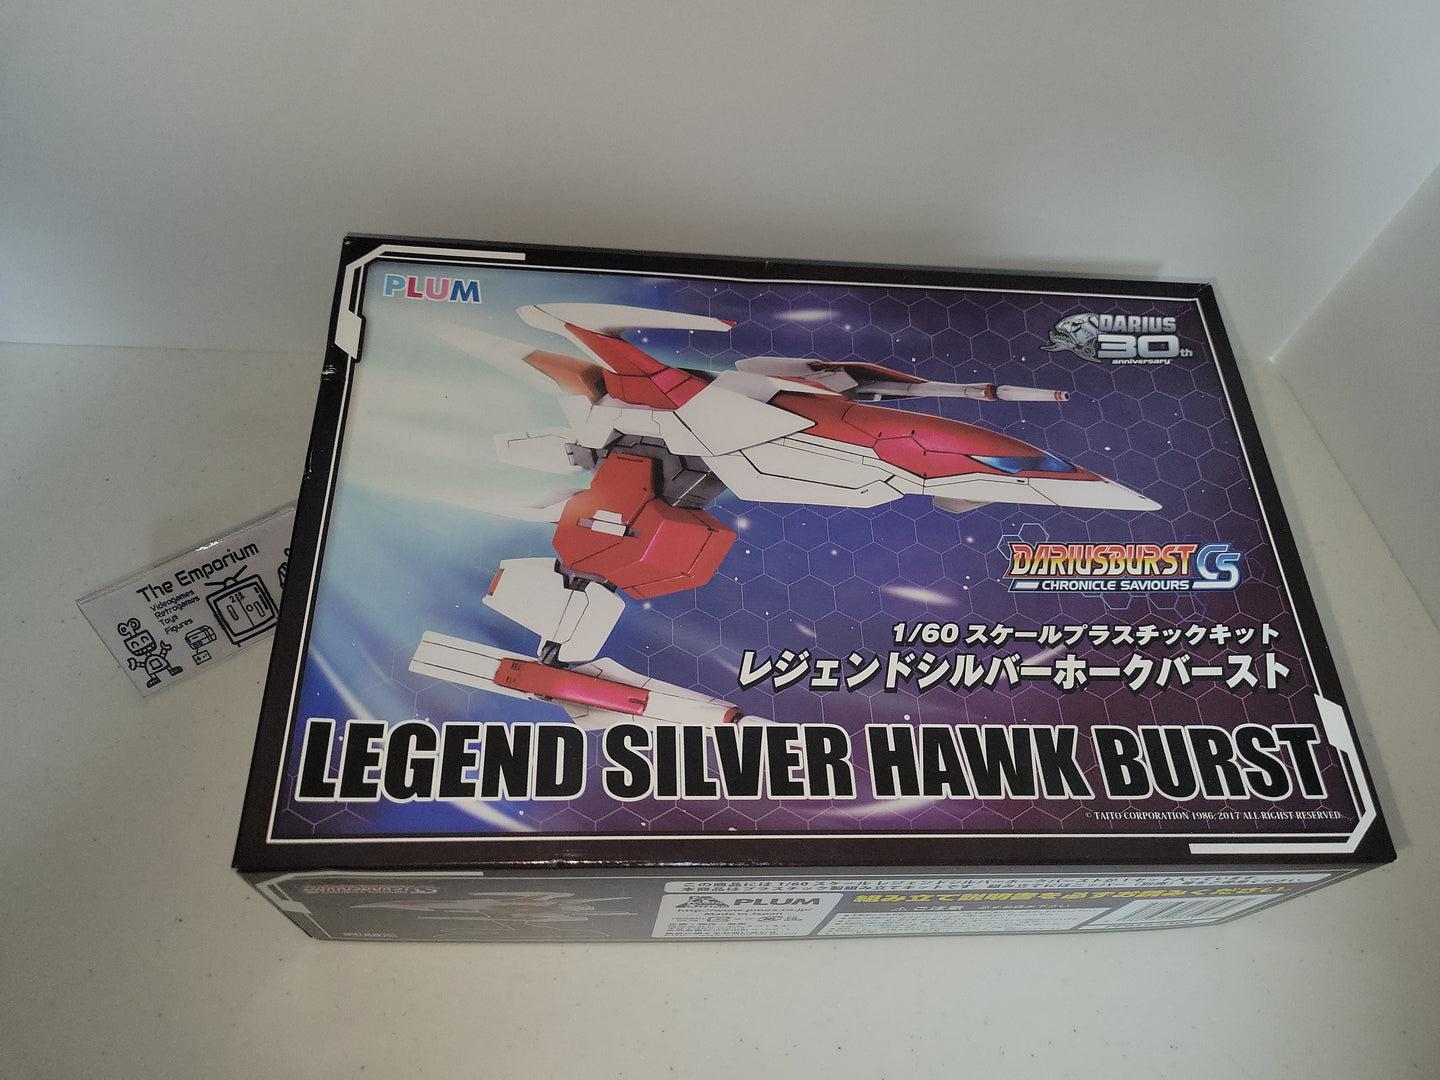 DariusBurst Legend Silver Hawk burst 1/60 Plastic Model Kit - toy action figure gadgets